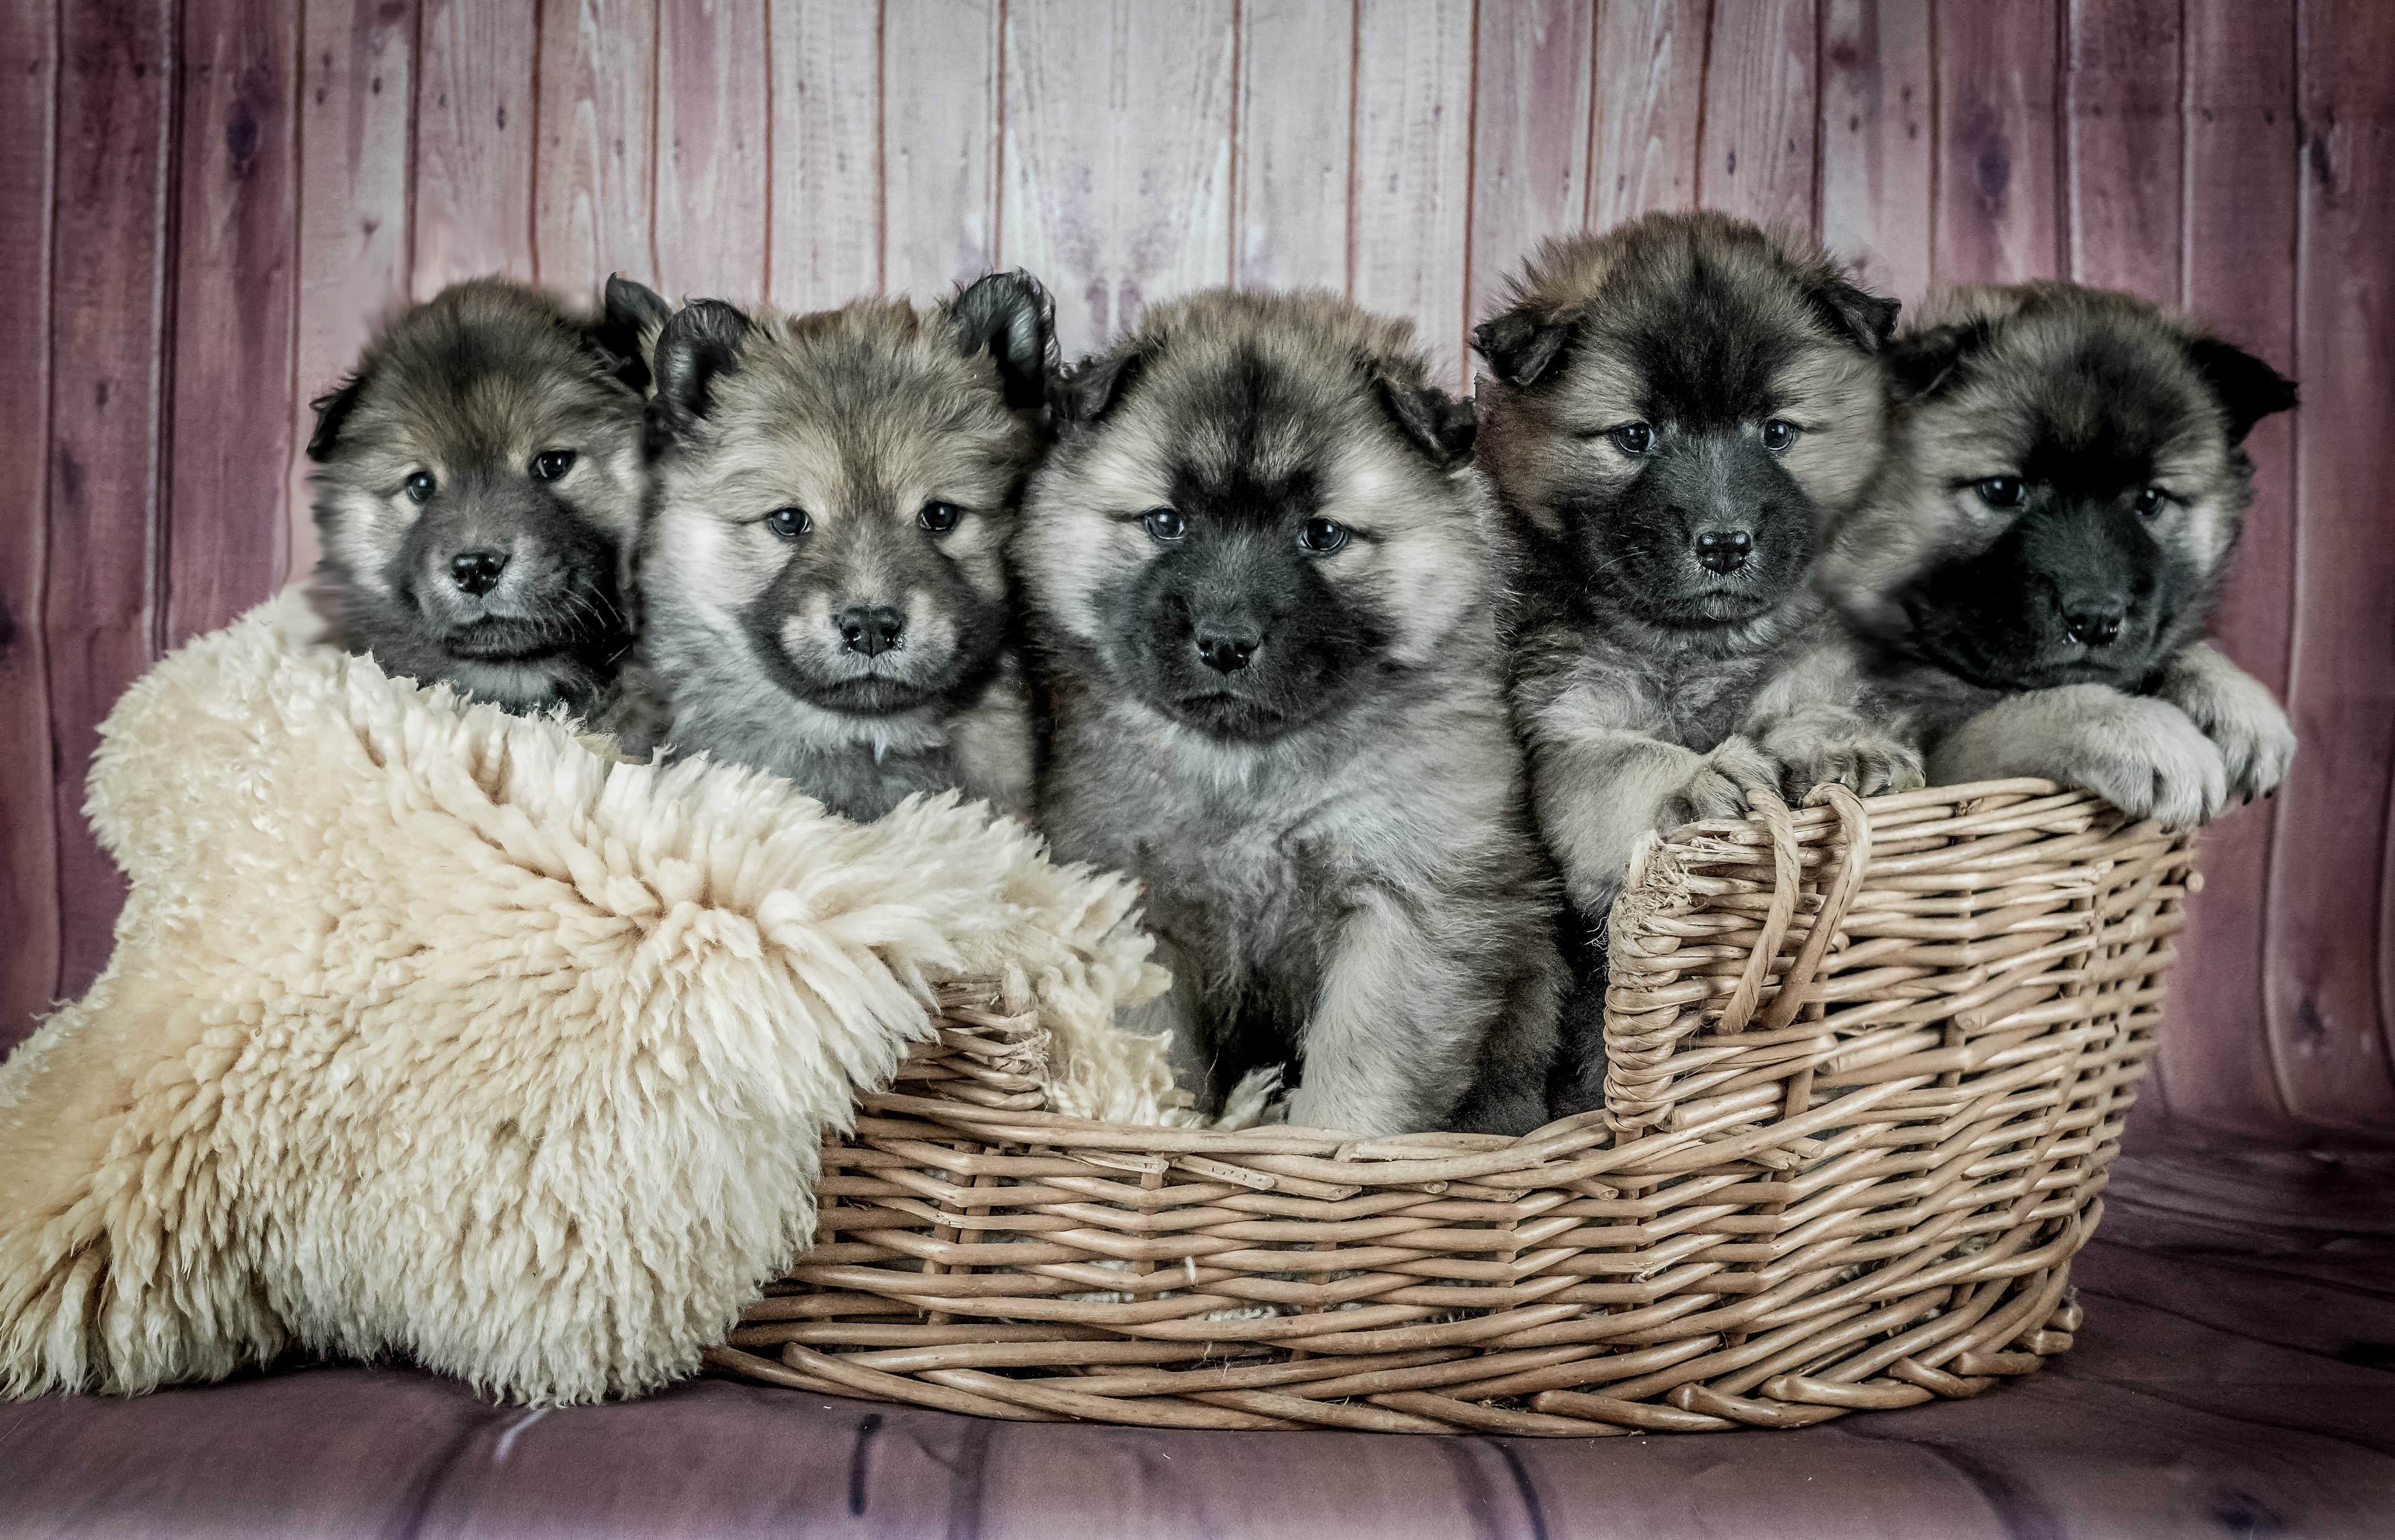 dog breeders - Husky Palace